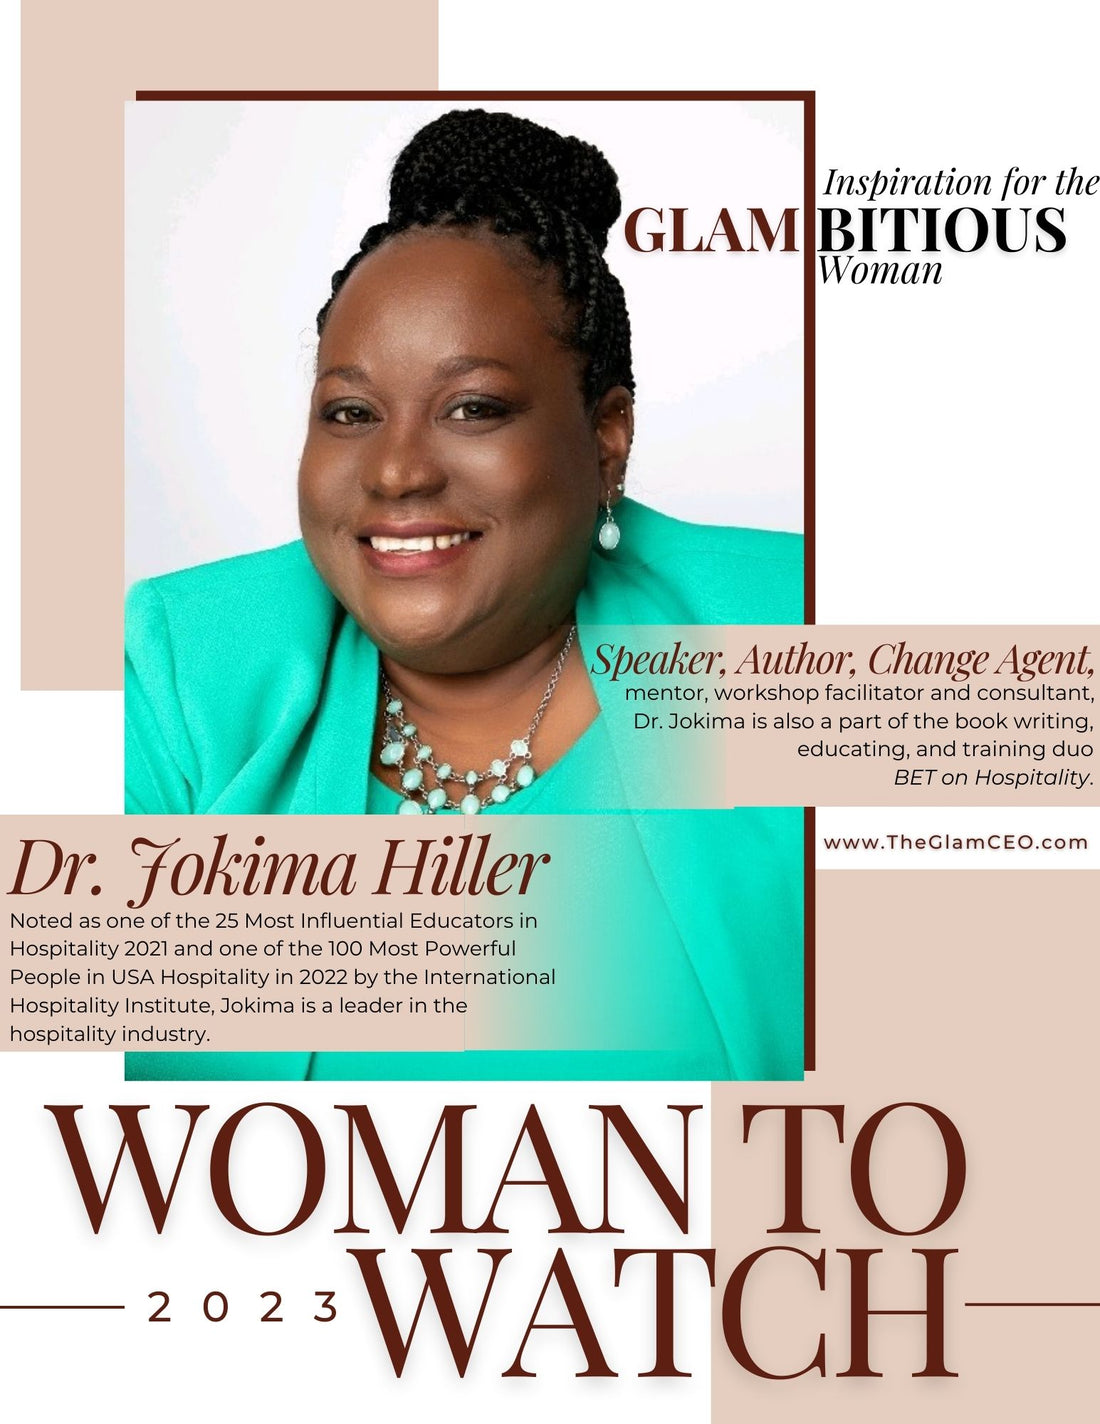 2023 Woman to Watch: Dr. Jokima Hiller!